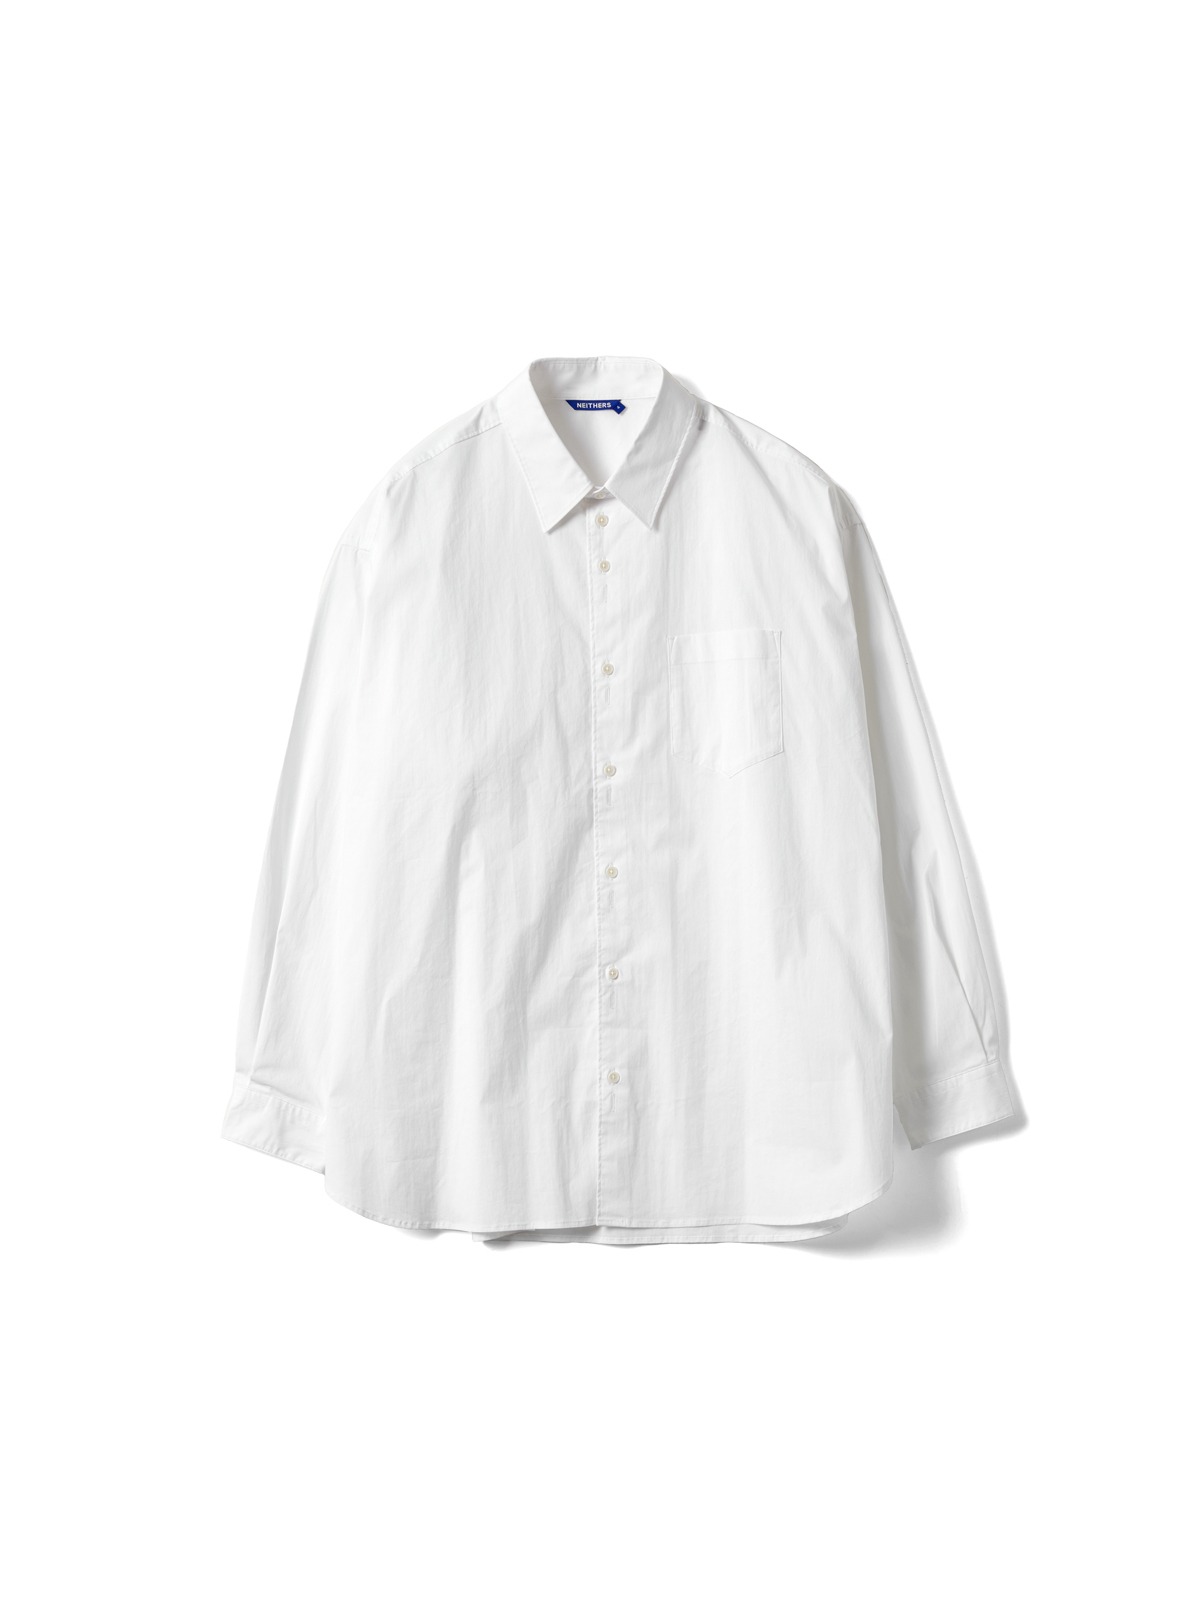 Drunken Collar Shirt (Off White)